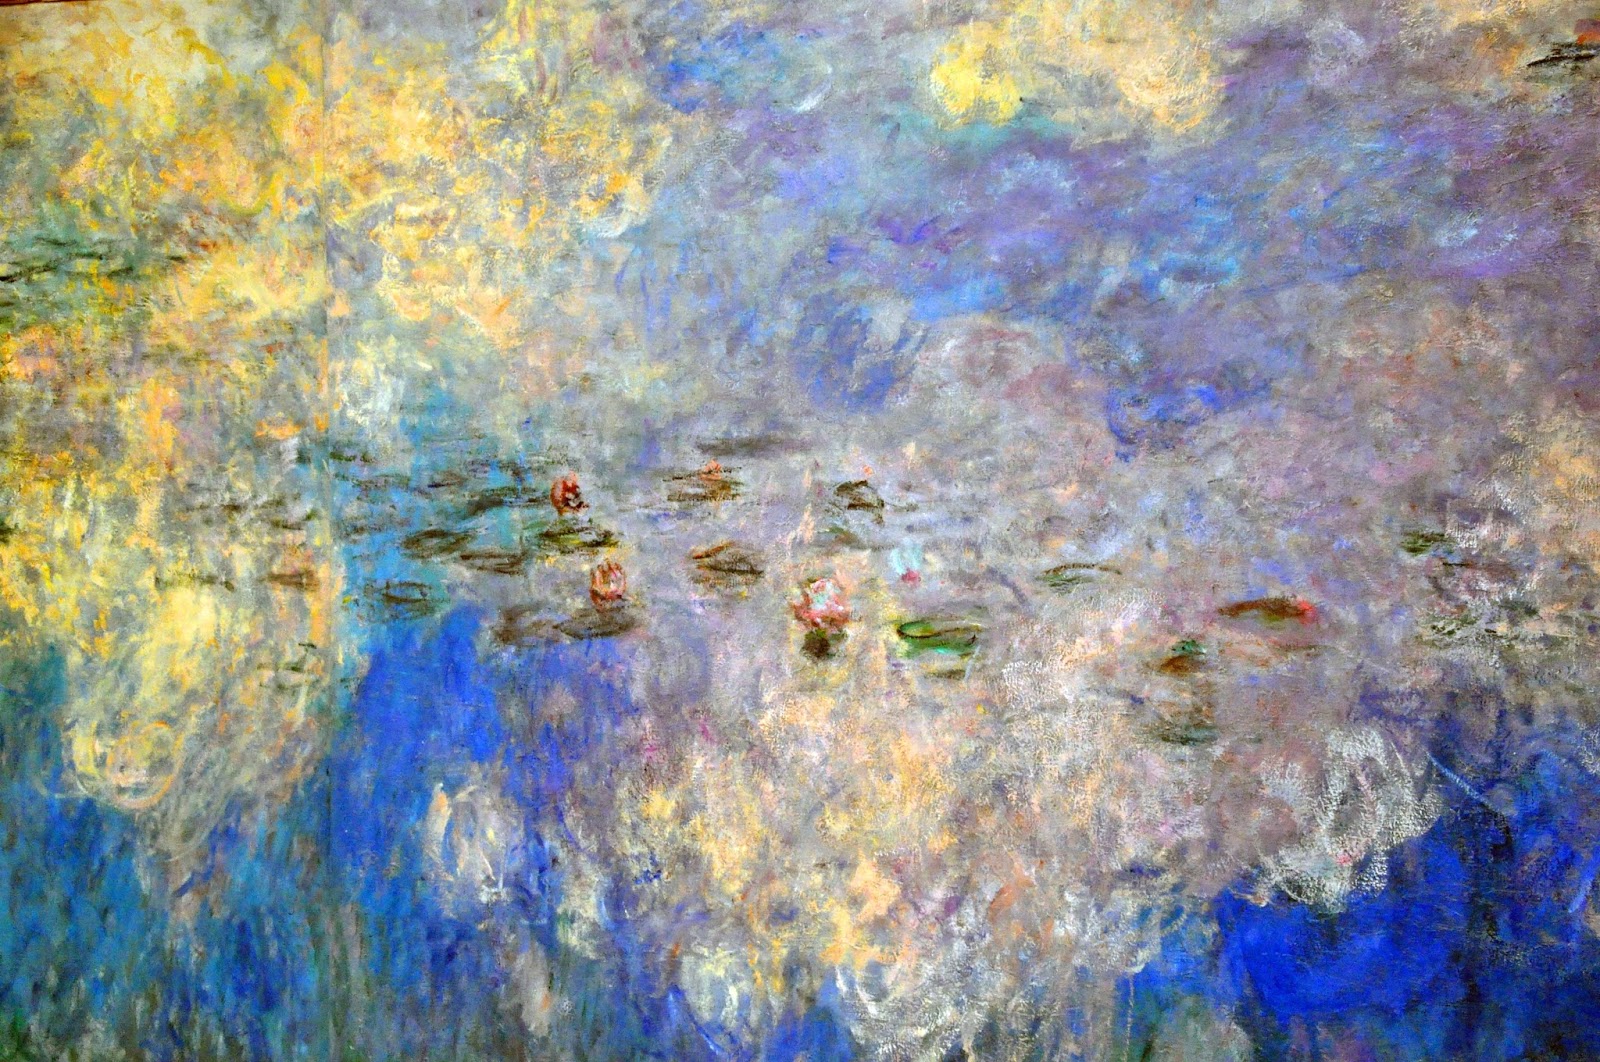 Claude+Monet-1840-1926 (833).jpg